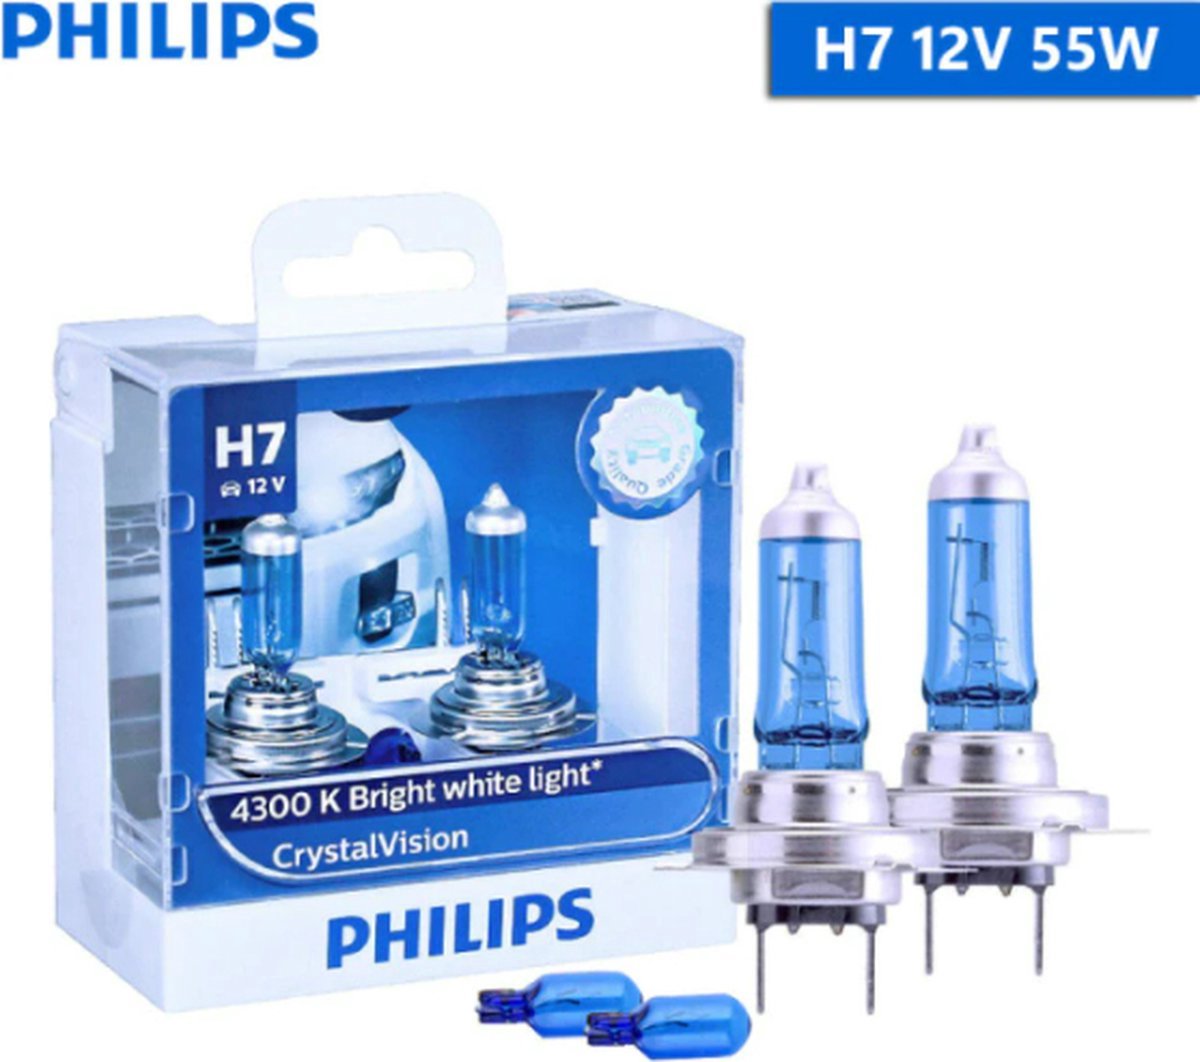 H7 55 Watt Philips Crystal Vision lampen 12V – Wit licht 4300K – Xenon look – LED look – Hoge lichtopbrengst – Lange levensduur – H7 55w Autolampen – Koplampen – Kleur wit – H.O.D. halogeen Origineel Philips lampen – 2 stuks – Gratis W5W stadslichten